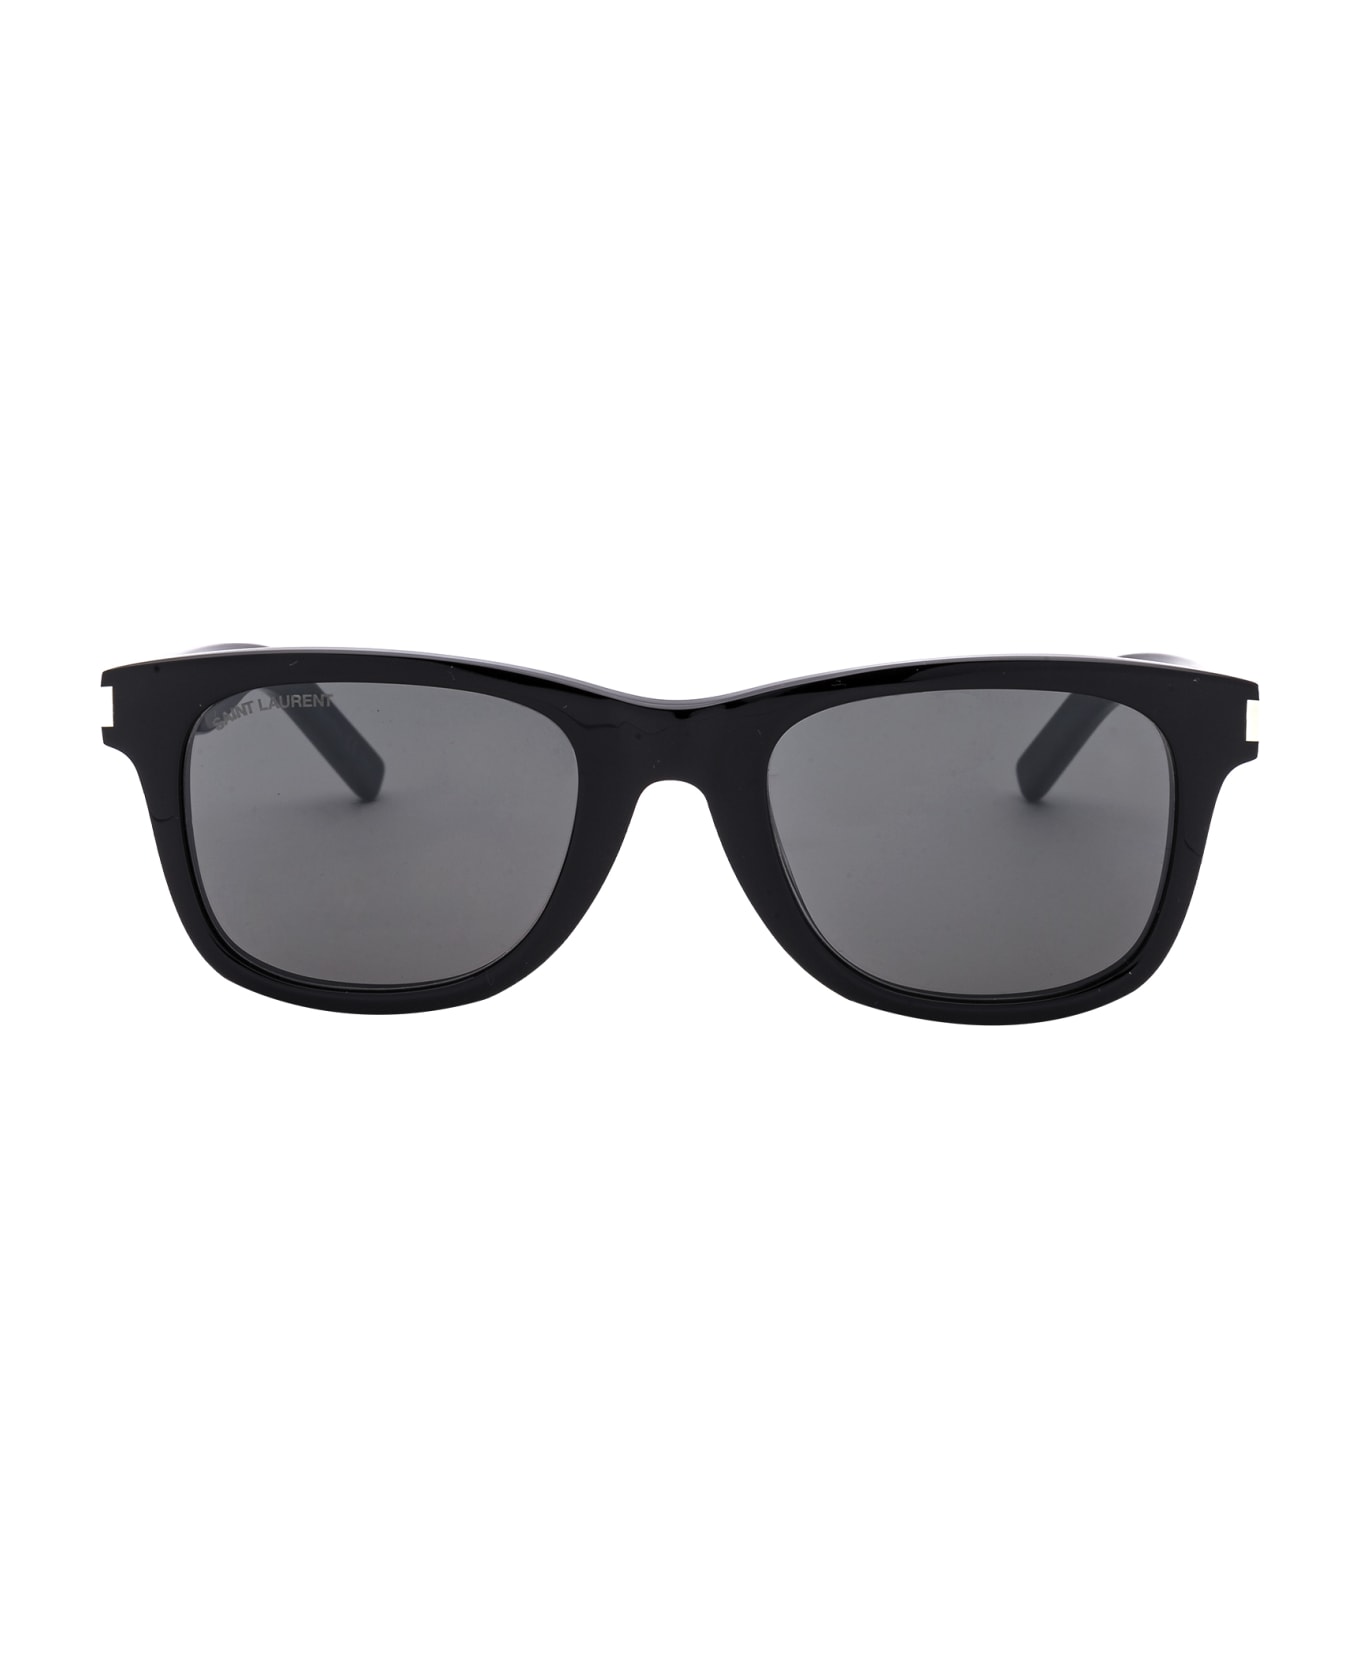 Saint Laurent Eyewear Sl 51 Sunglasses - 002 BLACK BLACK GREY